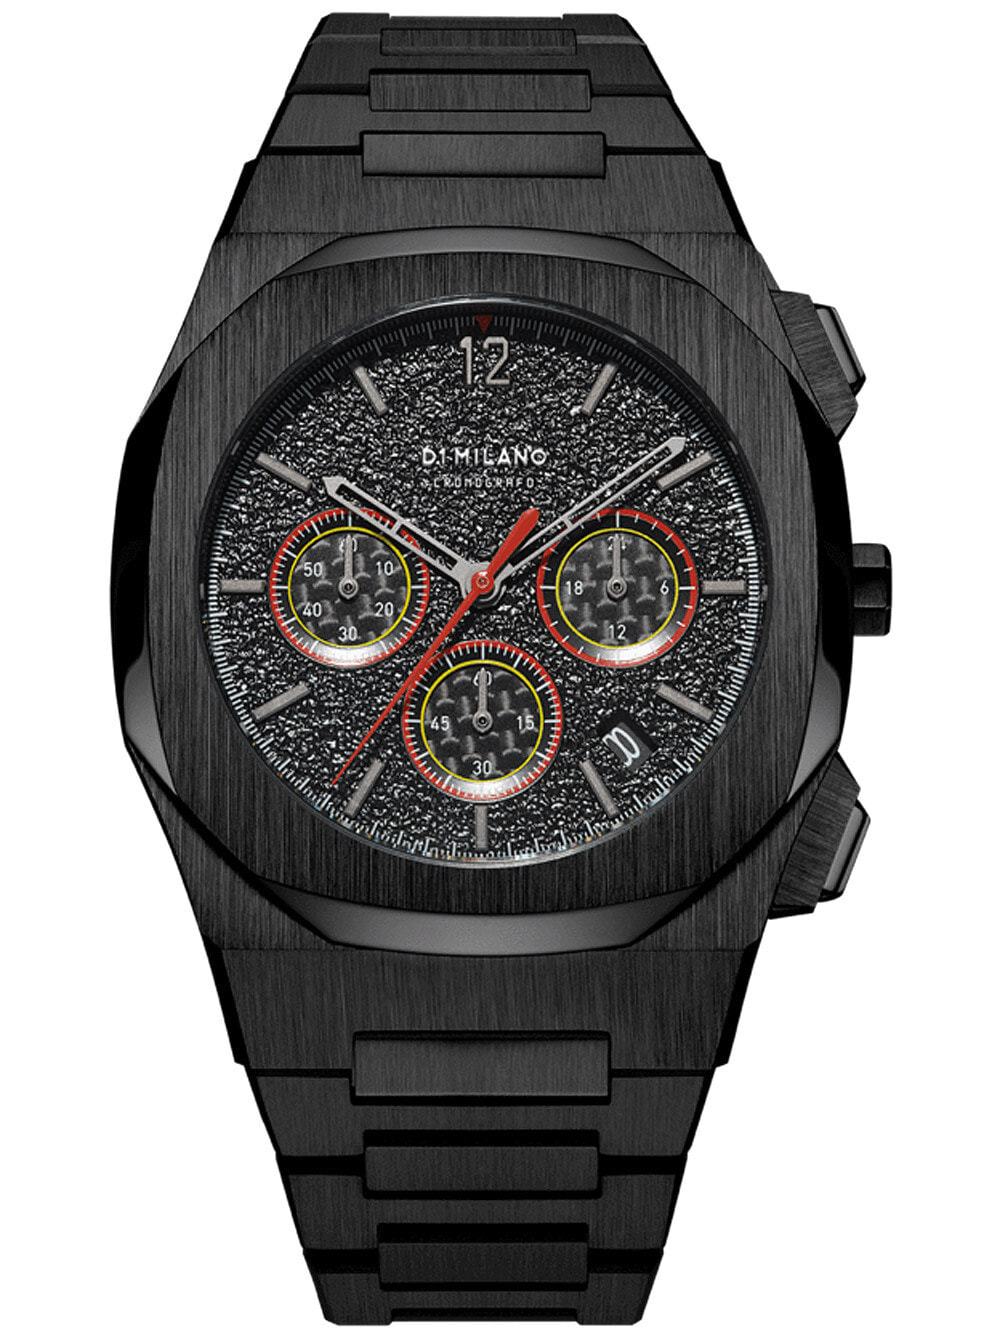 Мужские наручные часы с черным браслетом D1 Milano CHBJ06 chrono Sprint mens 42mm 5ATM